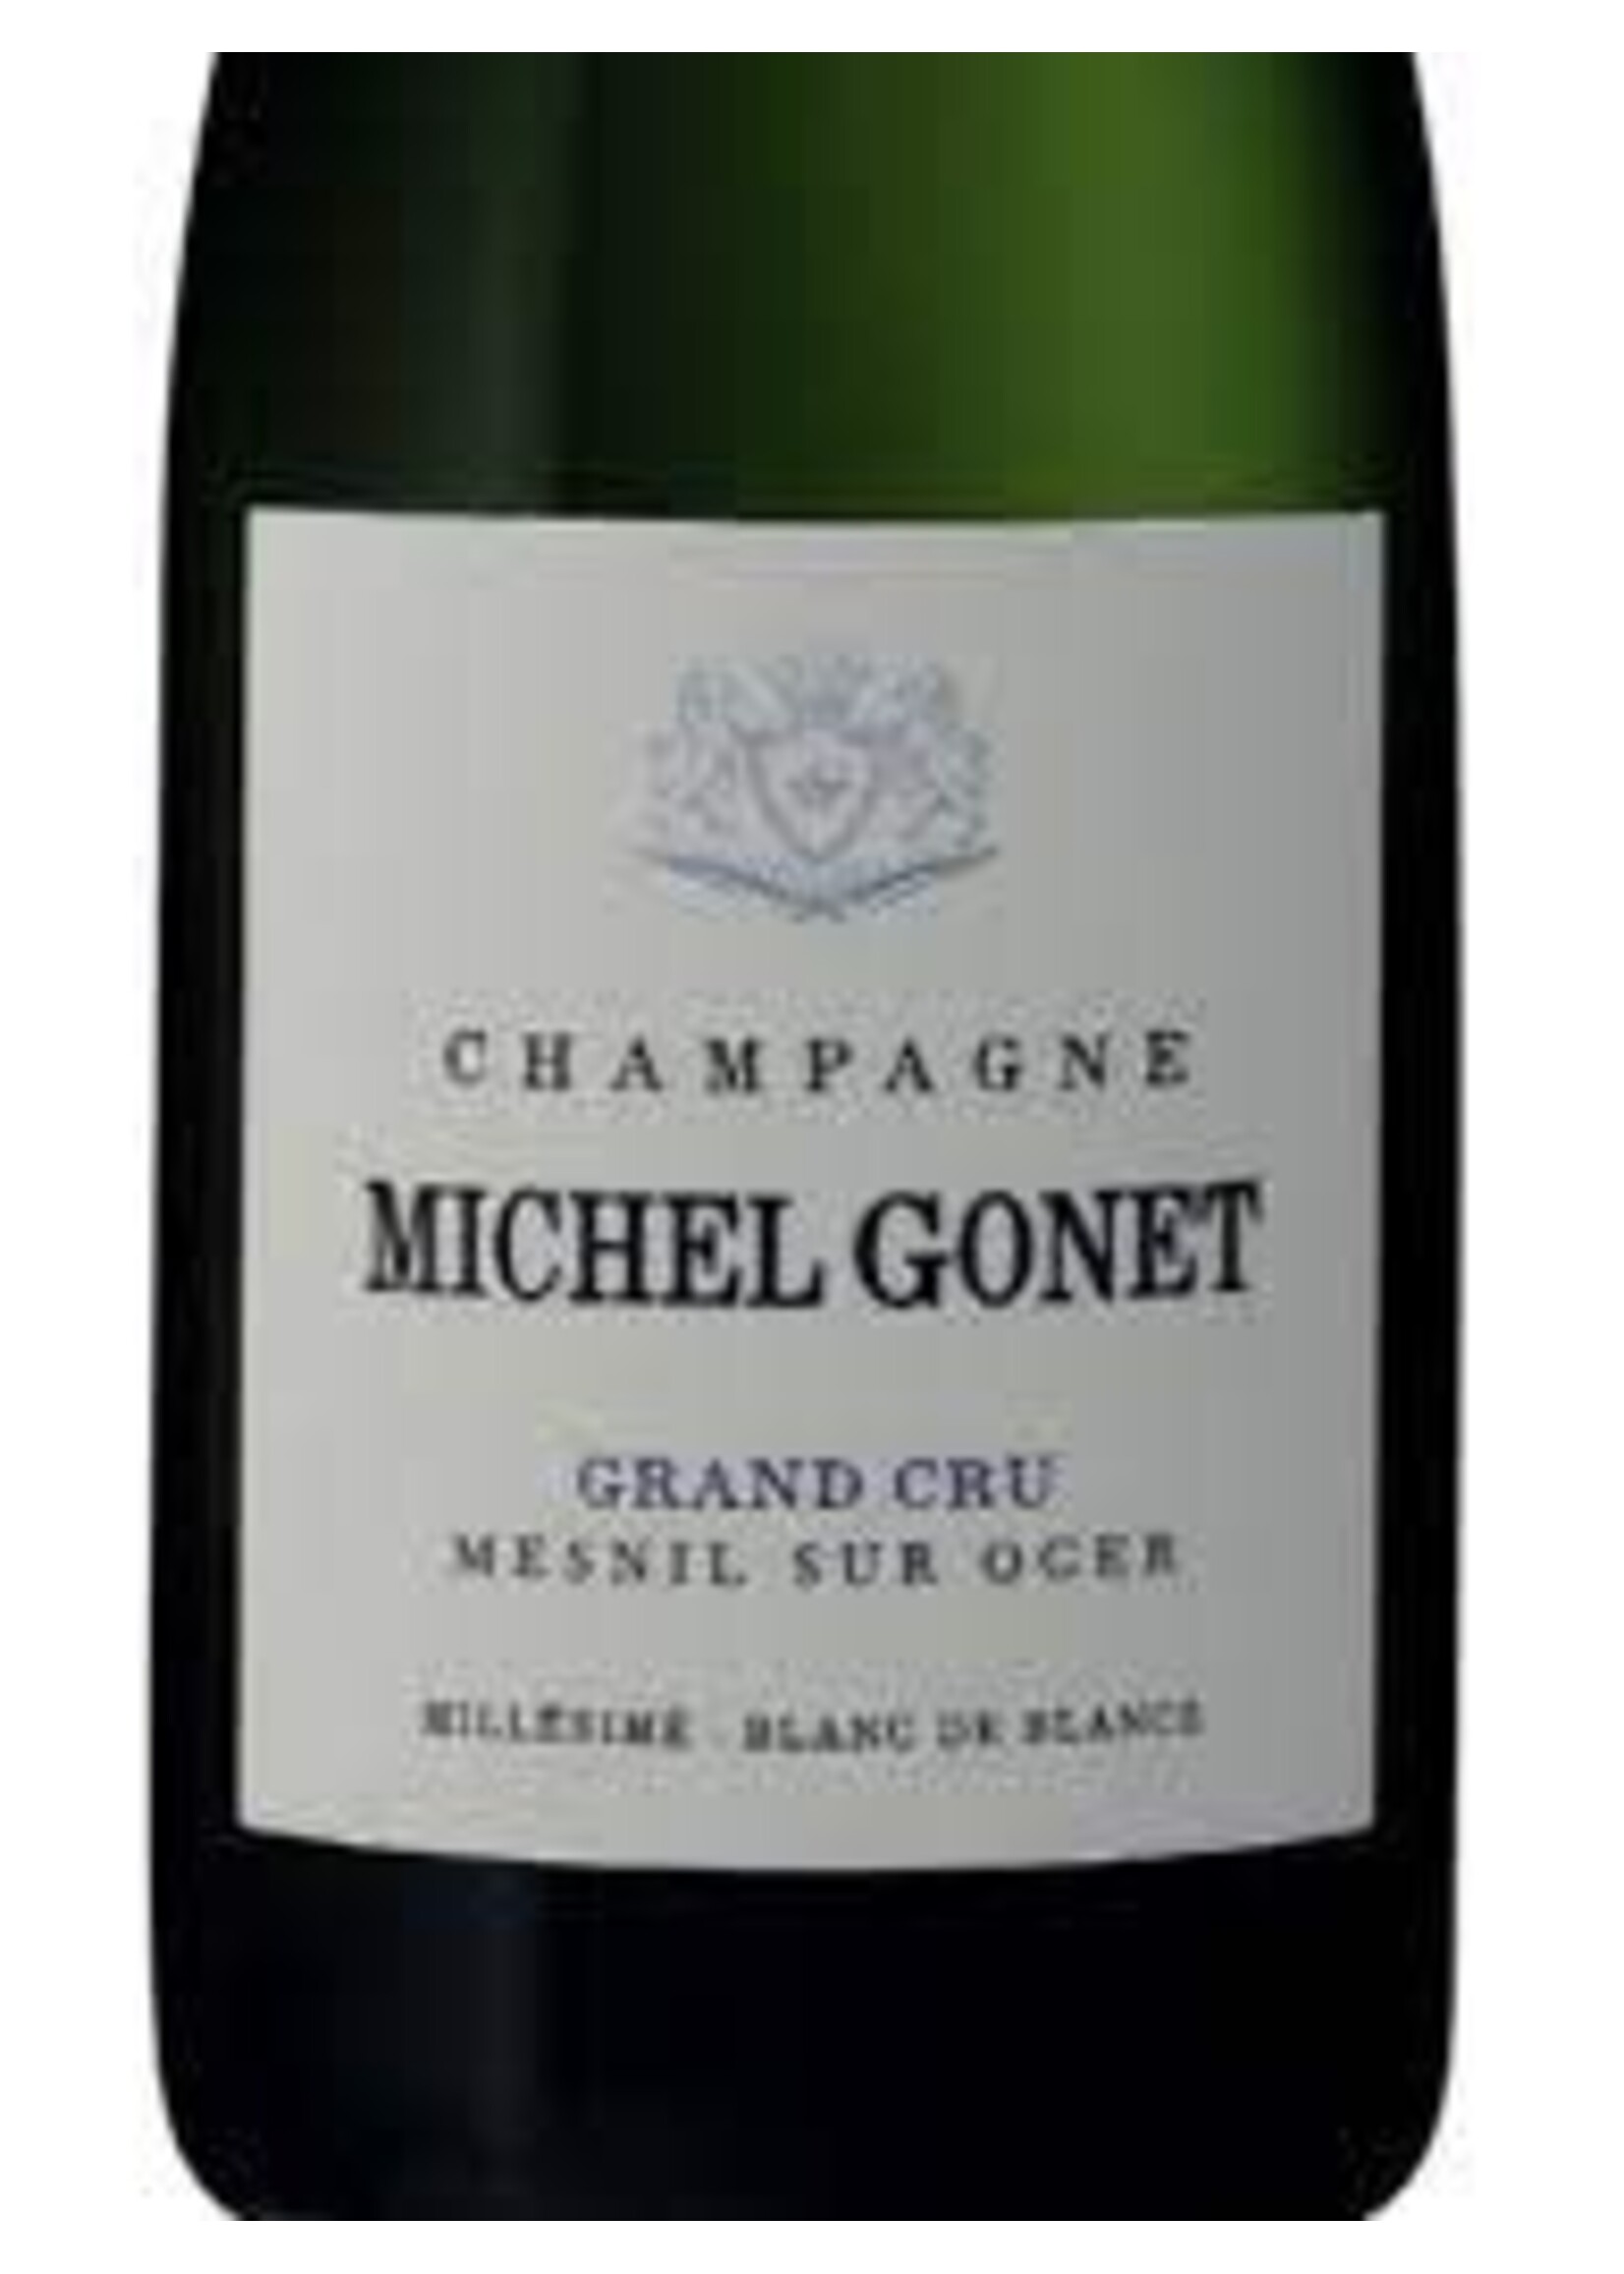 Michel Gonet Champagne 2015 Millesime Blanc de Blancs Mesnil Sur Oger Grand Cru 750ml